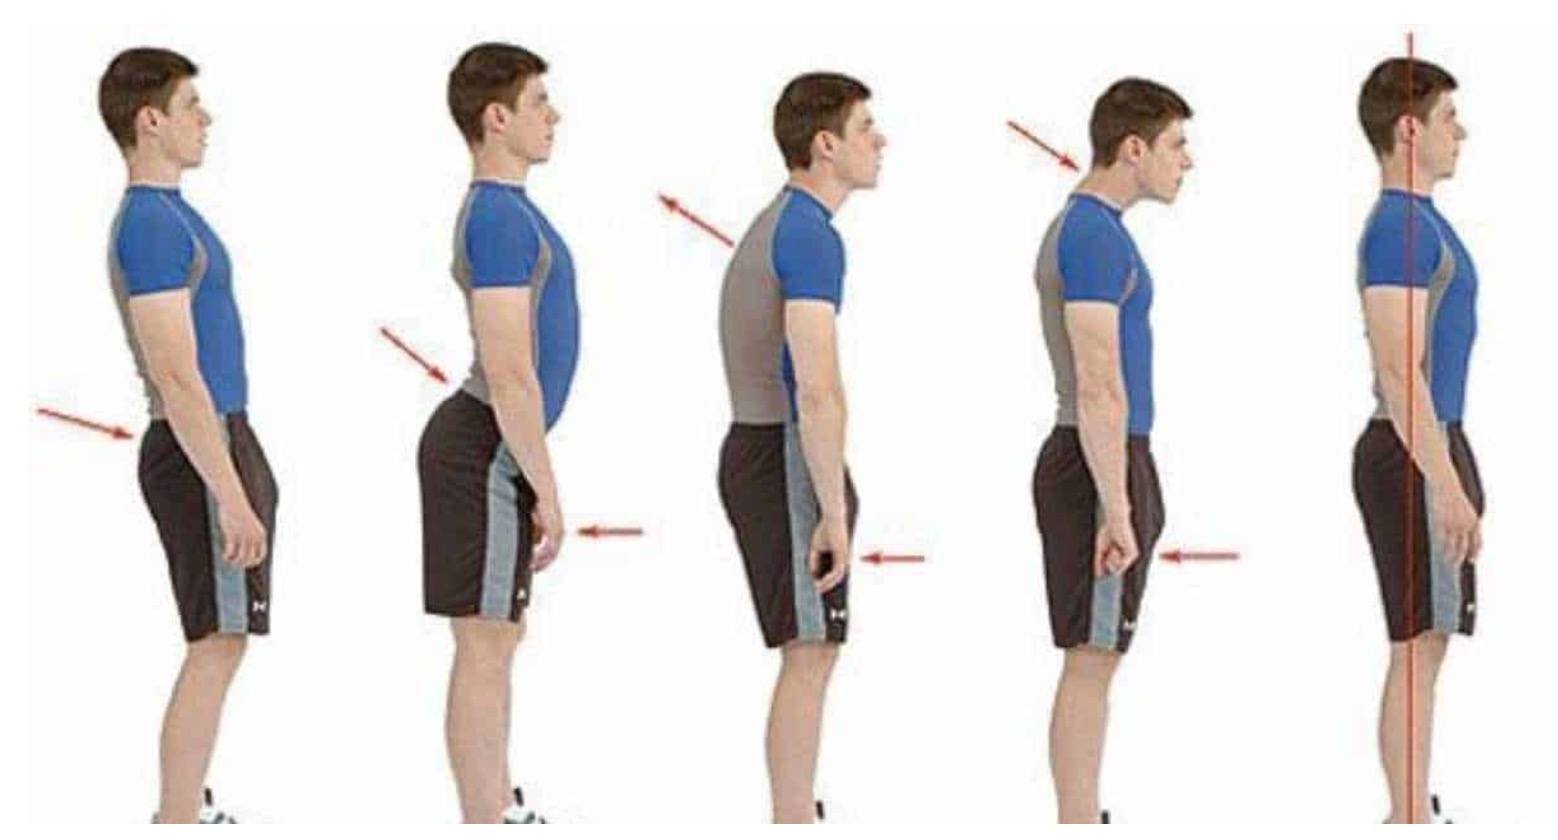 Posture Corrector - To Improve Your Posture